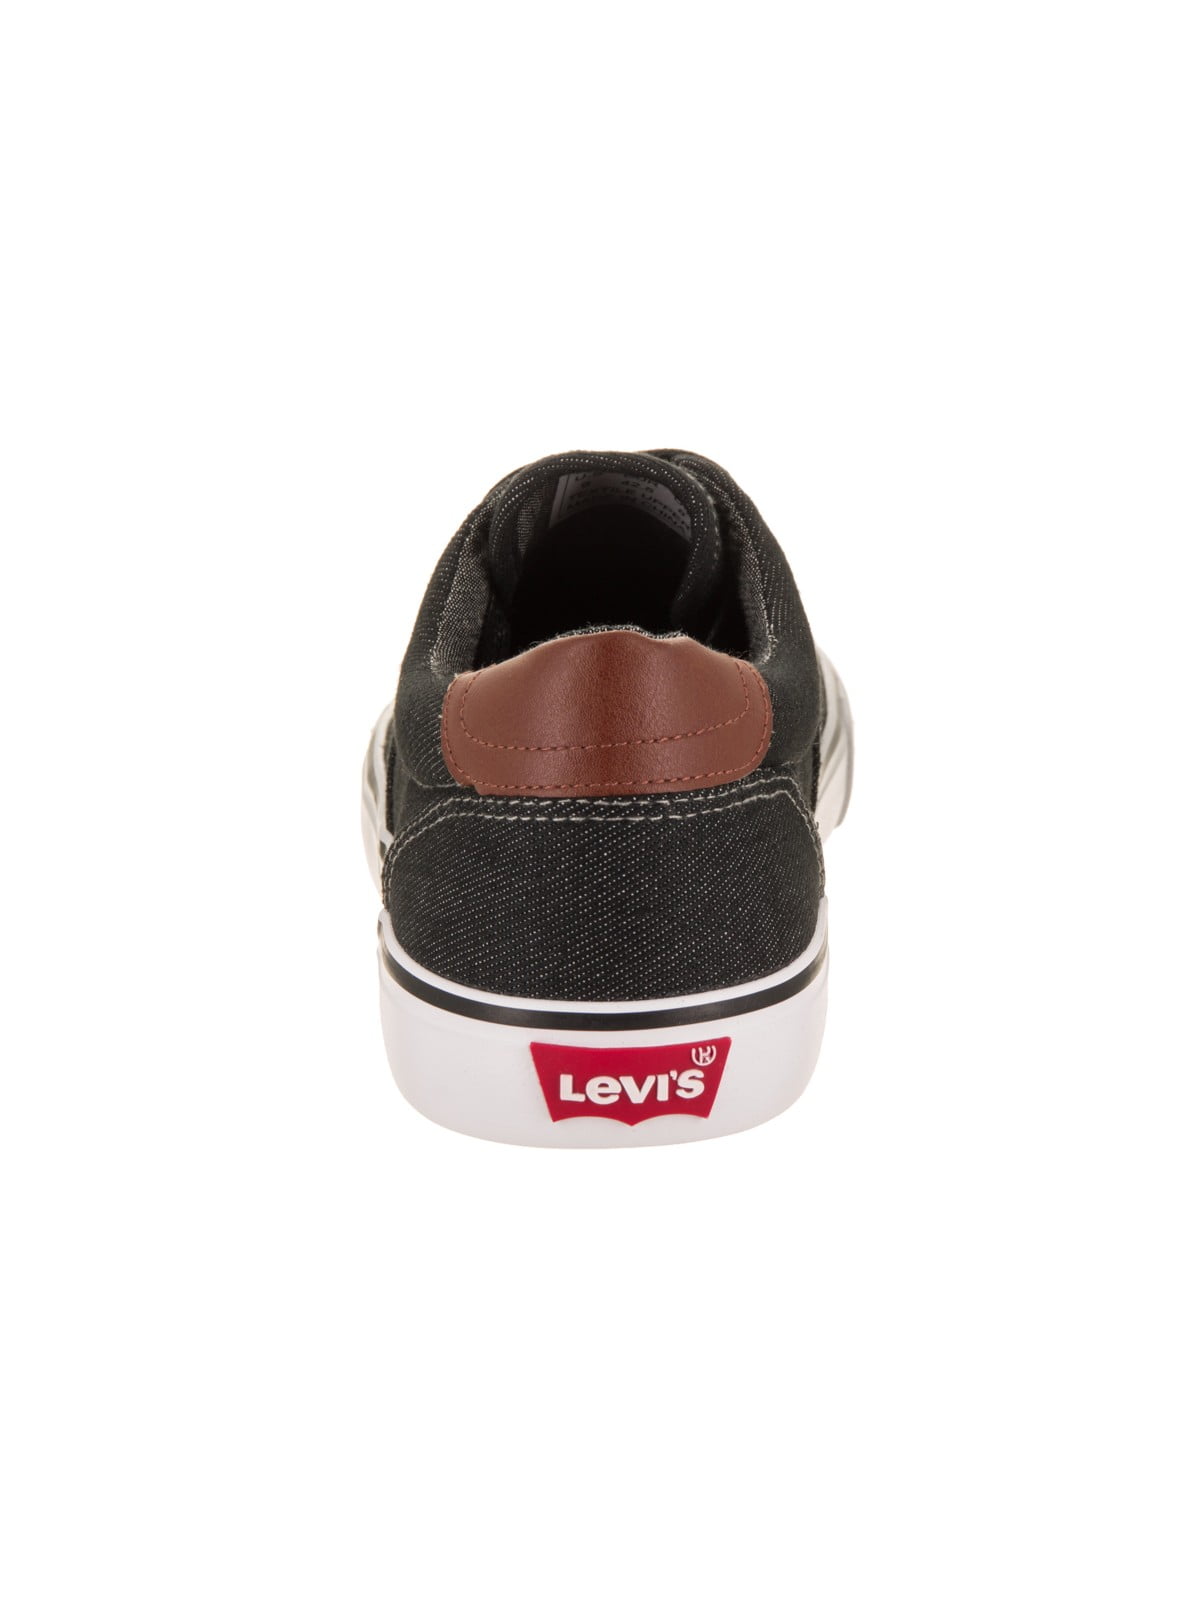 levis mens shoes canada